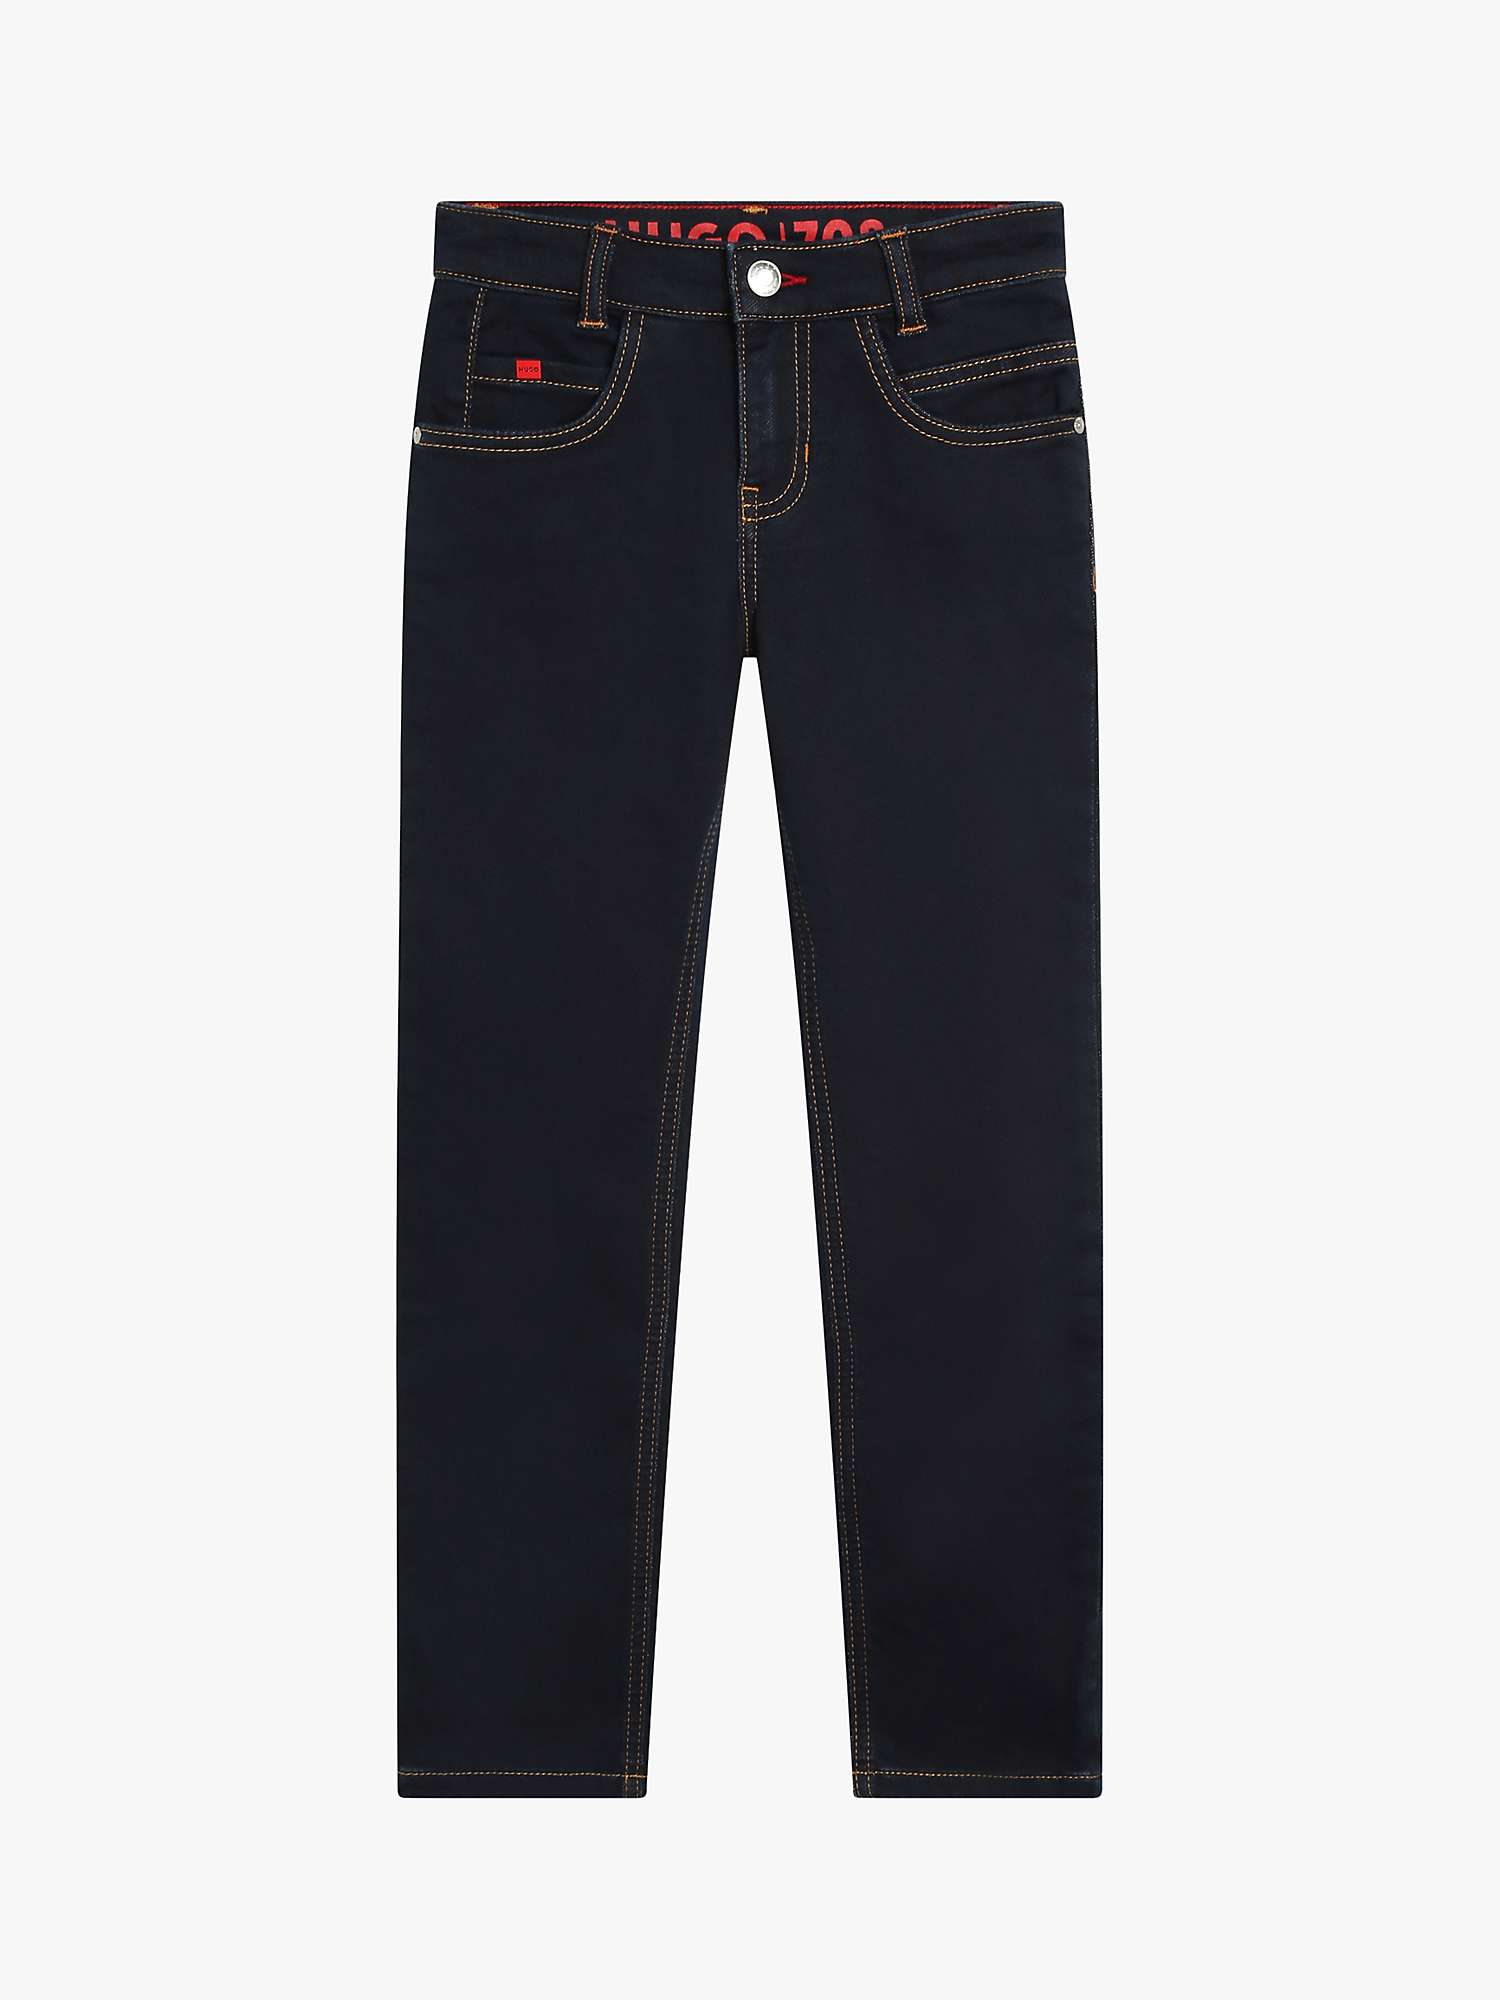 Buy BOSS Kids' Slim Fit Jeans, Black Online at johnlewis.com